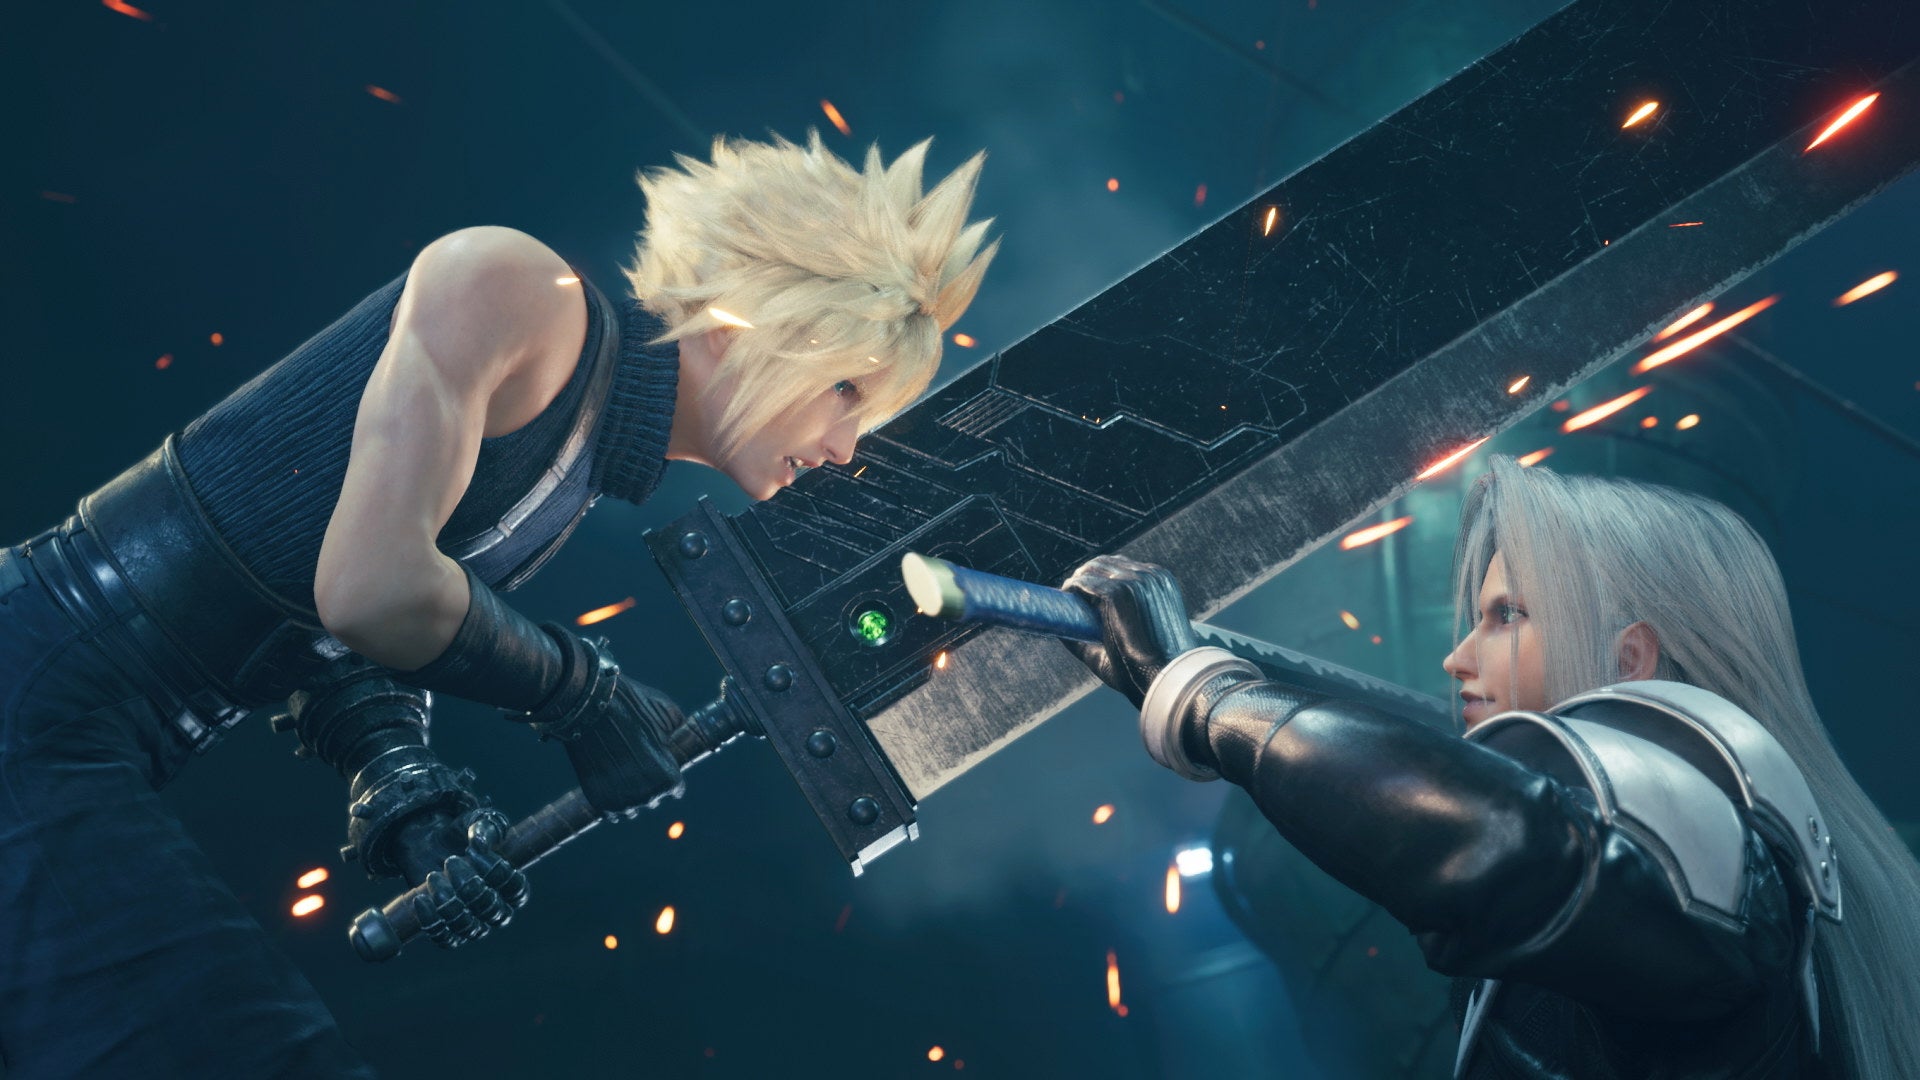 Cloud and Sephiroth clash swords in a Final Fantasy VII Remake Intergrade screenshot.